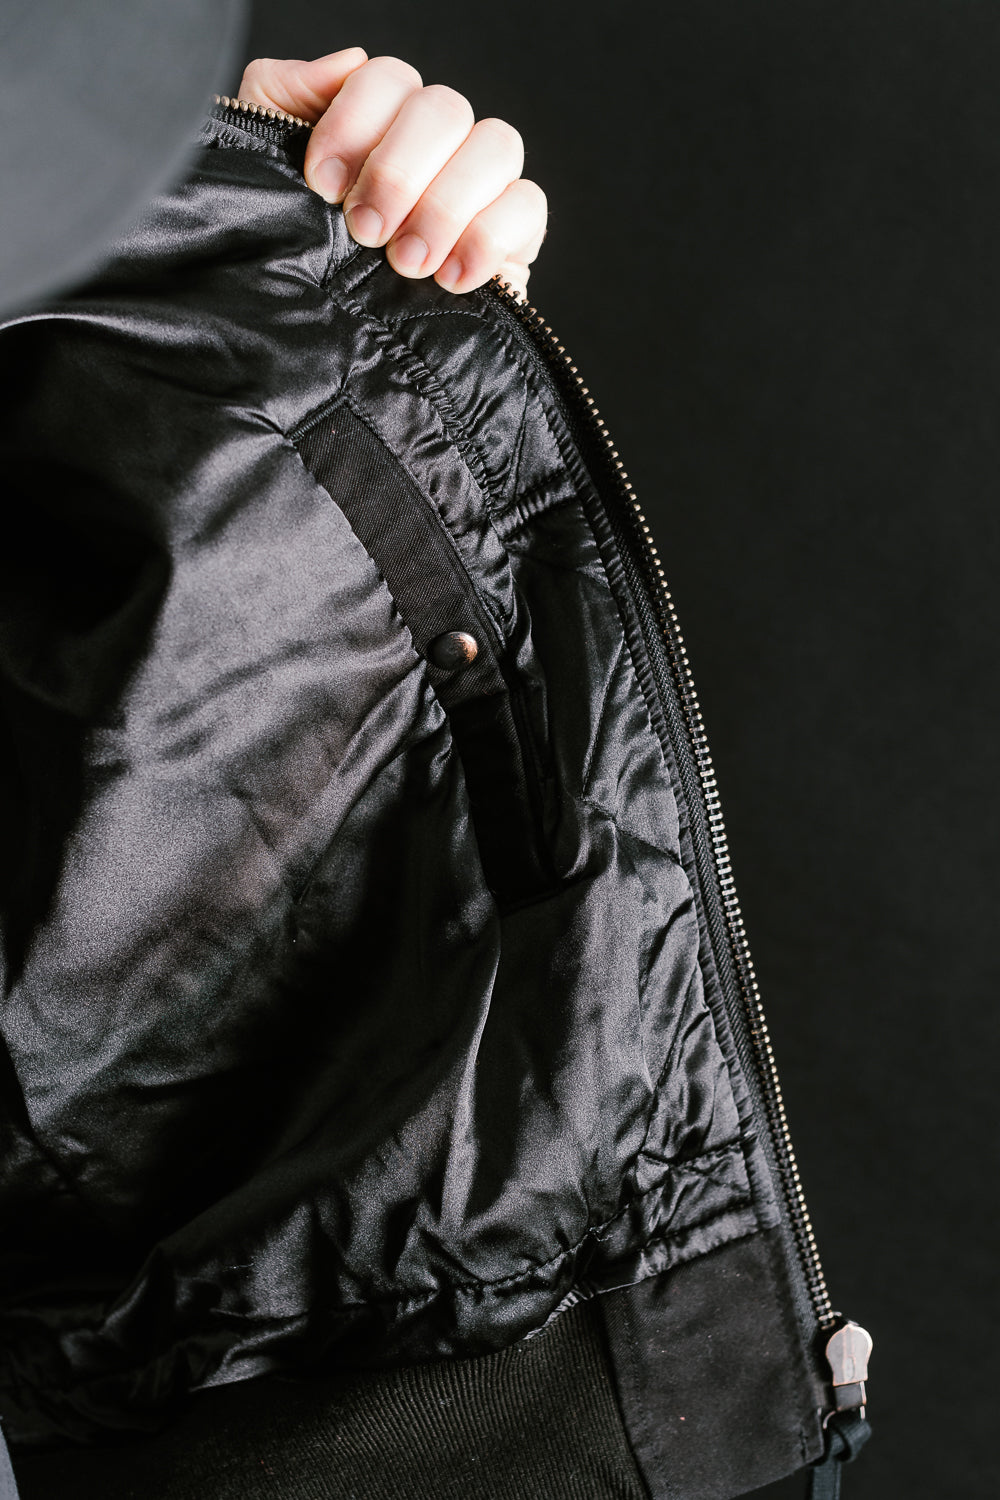 4578 - Kyoto Kurozome Dyed MA-1  Jacket - Black